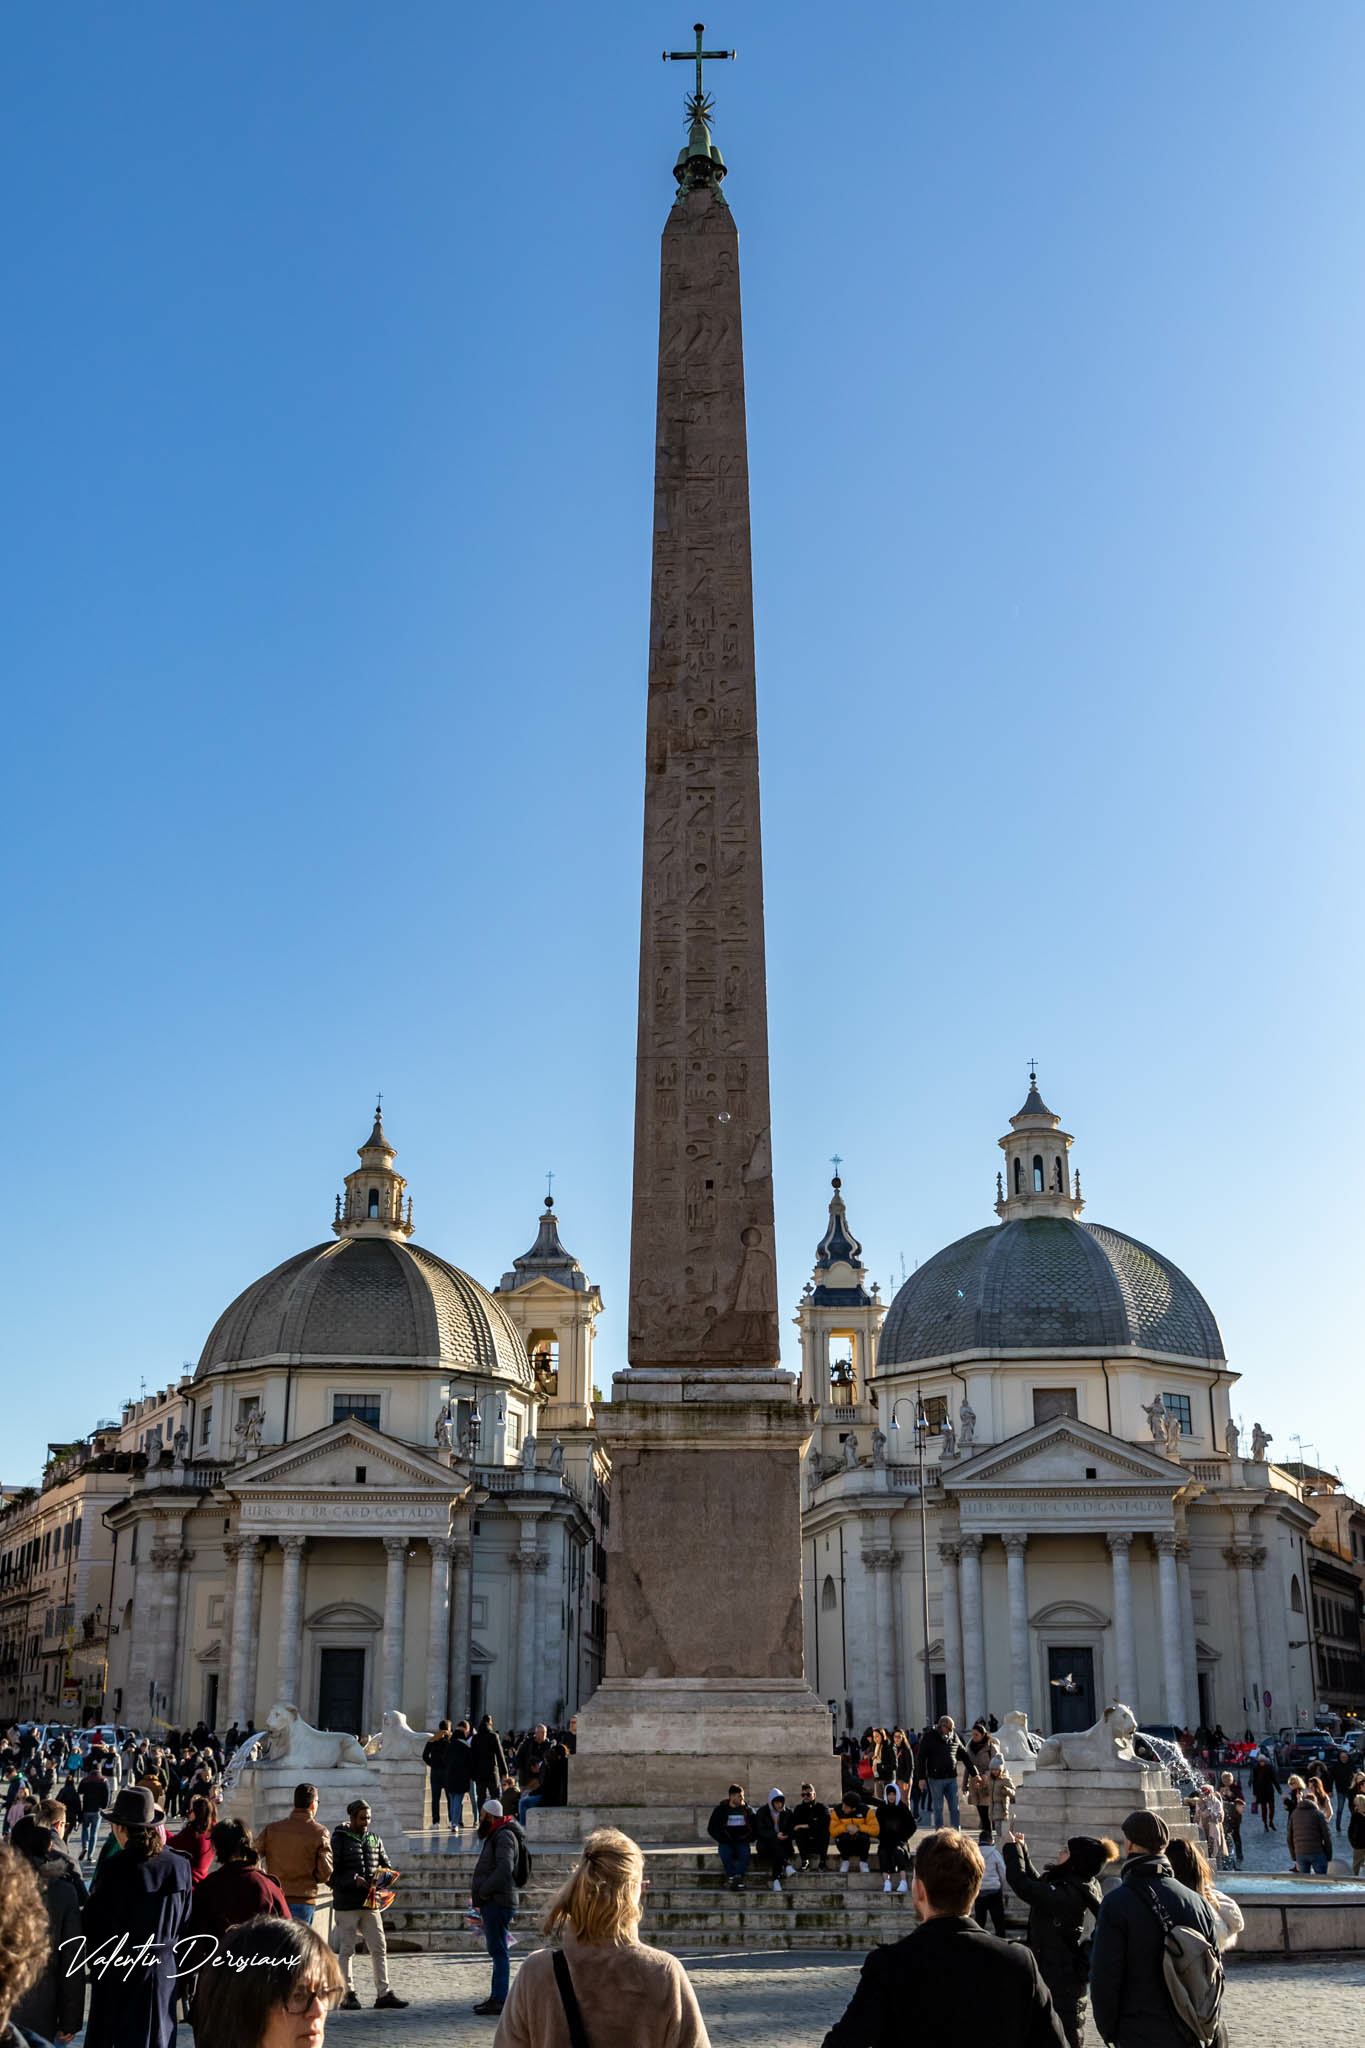 Obélisque Egyptien au lieu de la Piazza Del Popolo.